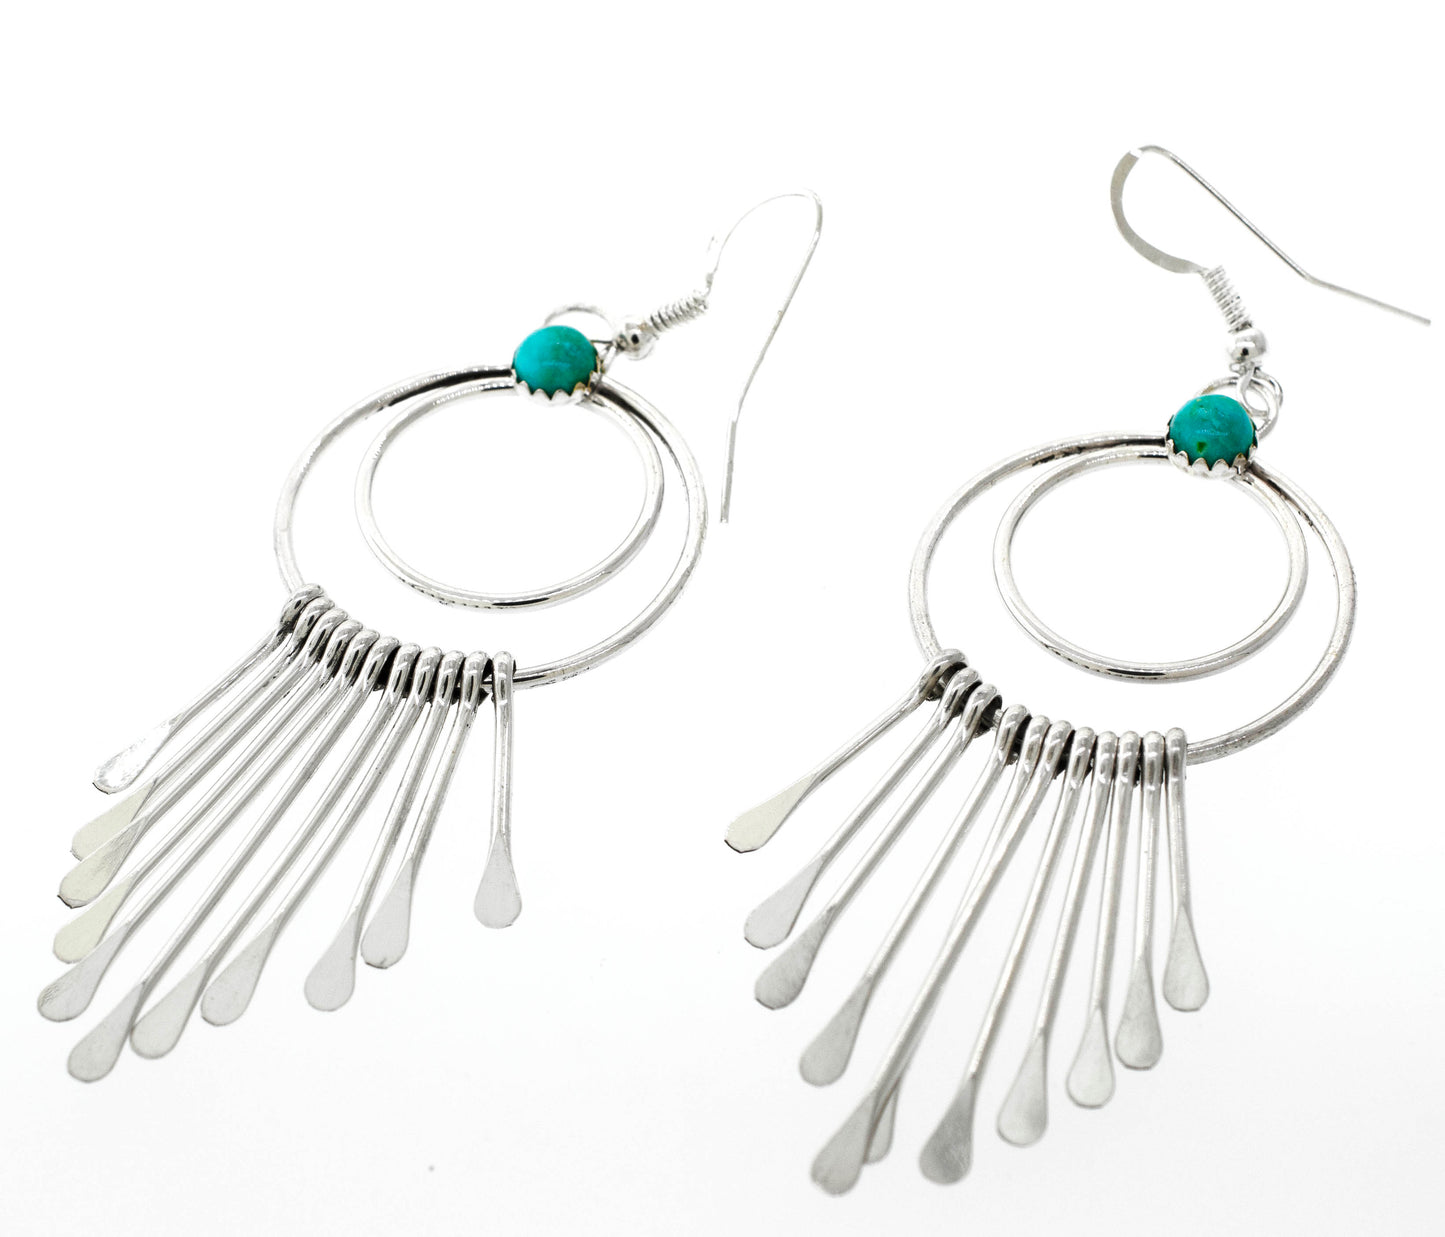 Handmade Super Silver Native American earrings featuring Alluring Turquoise Chandelier Earrings.